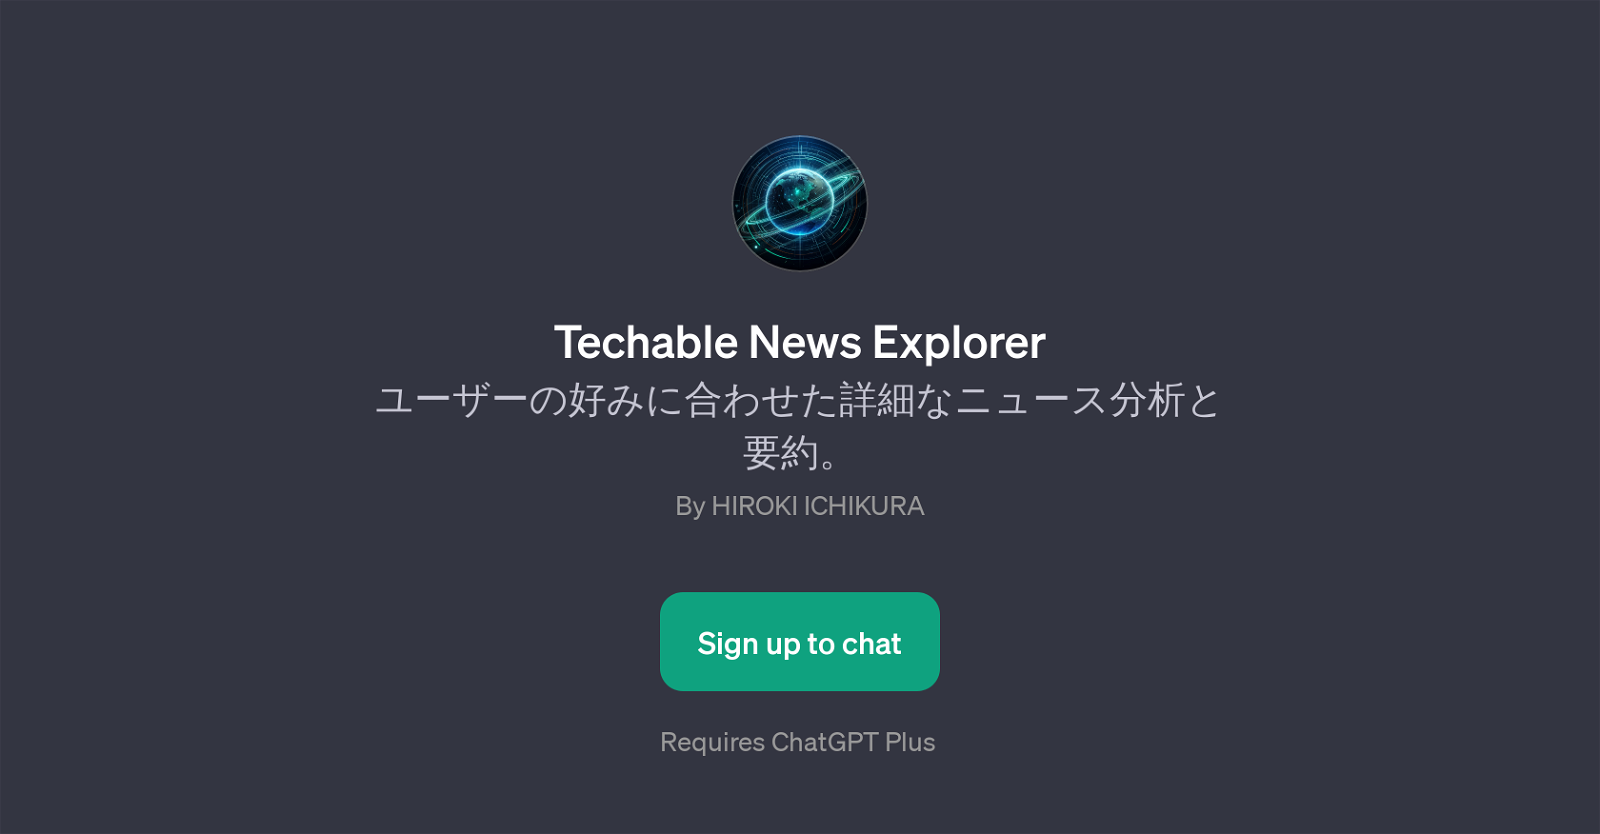 Techable News Explorer website